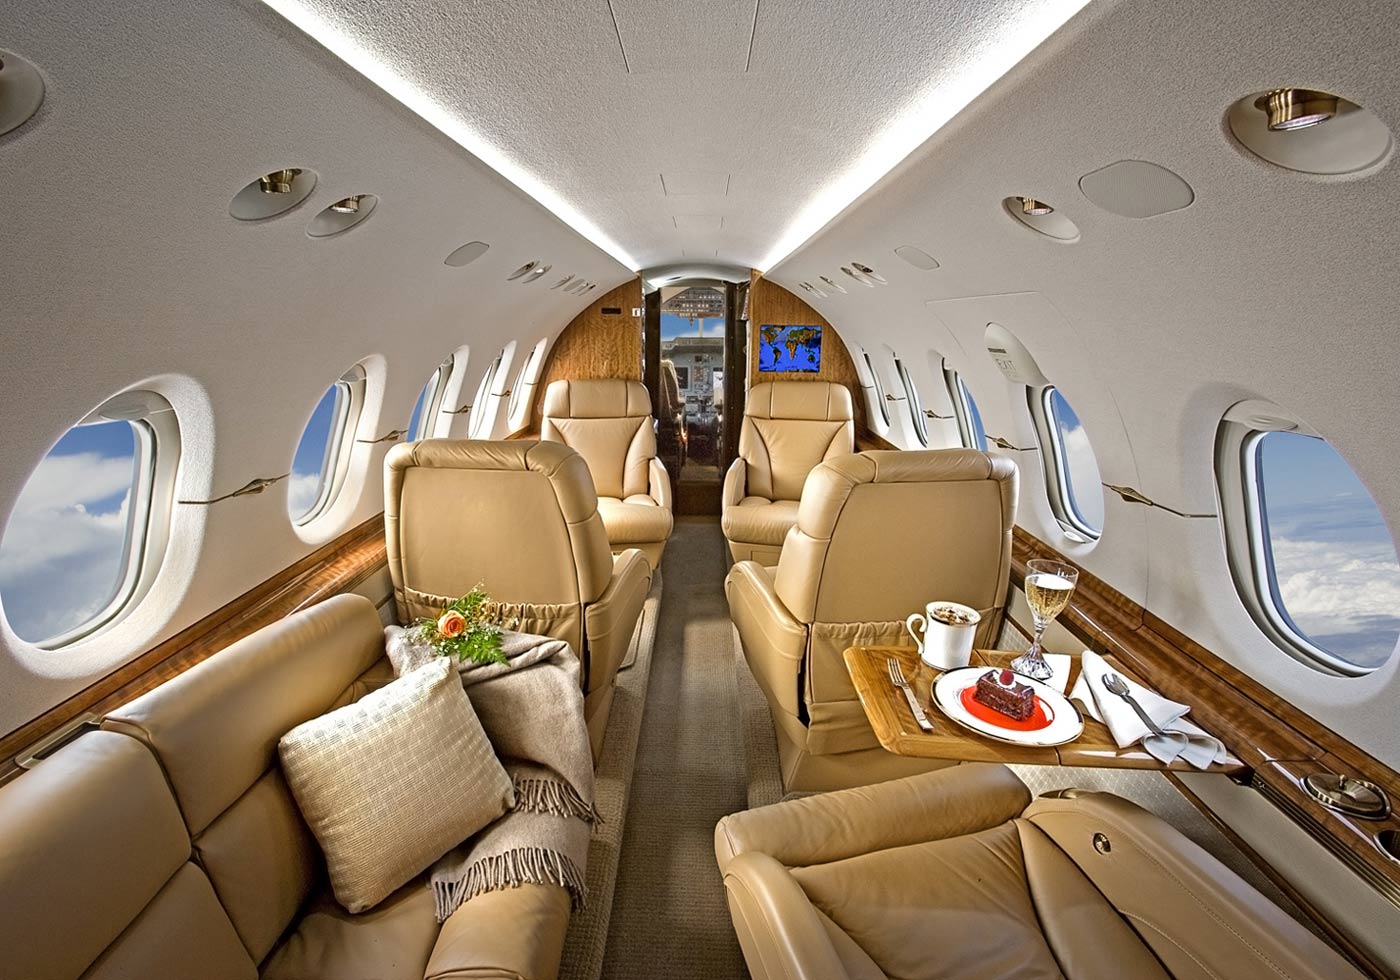 Частный джет. Bombardier Global 7000. Luxury private Jet Interior 2021 | Gulfstream g700. Самолёт Bombardier Global 7000 салон. Прайват Джет.